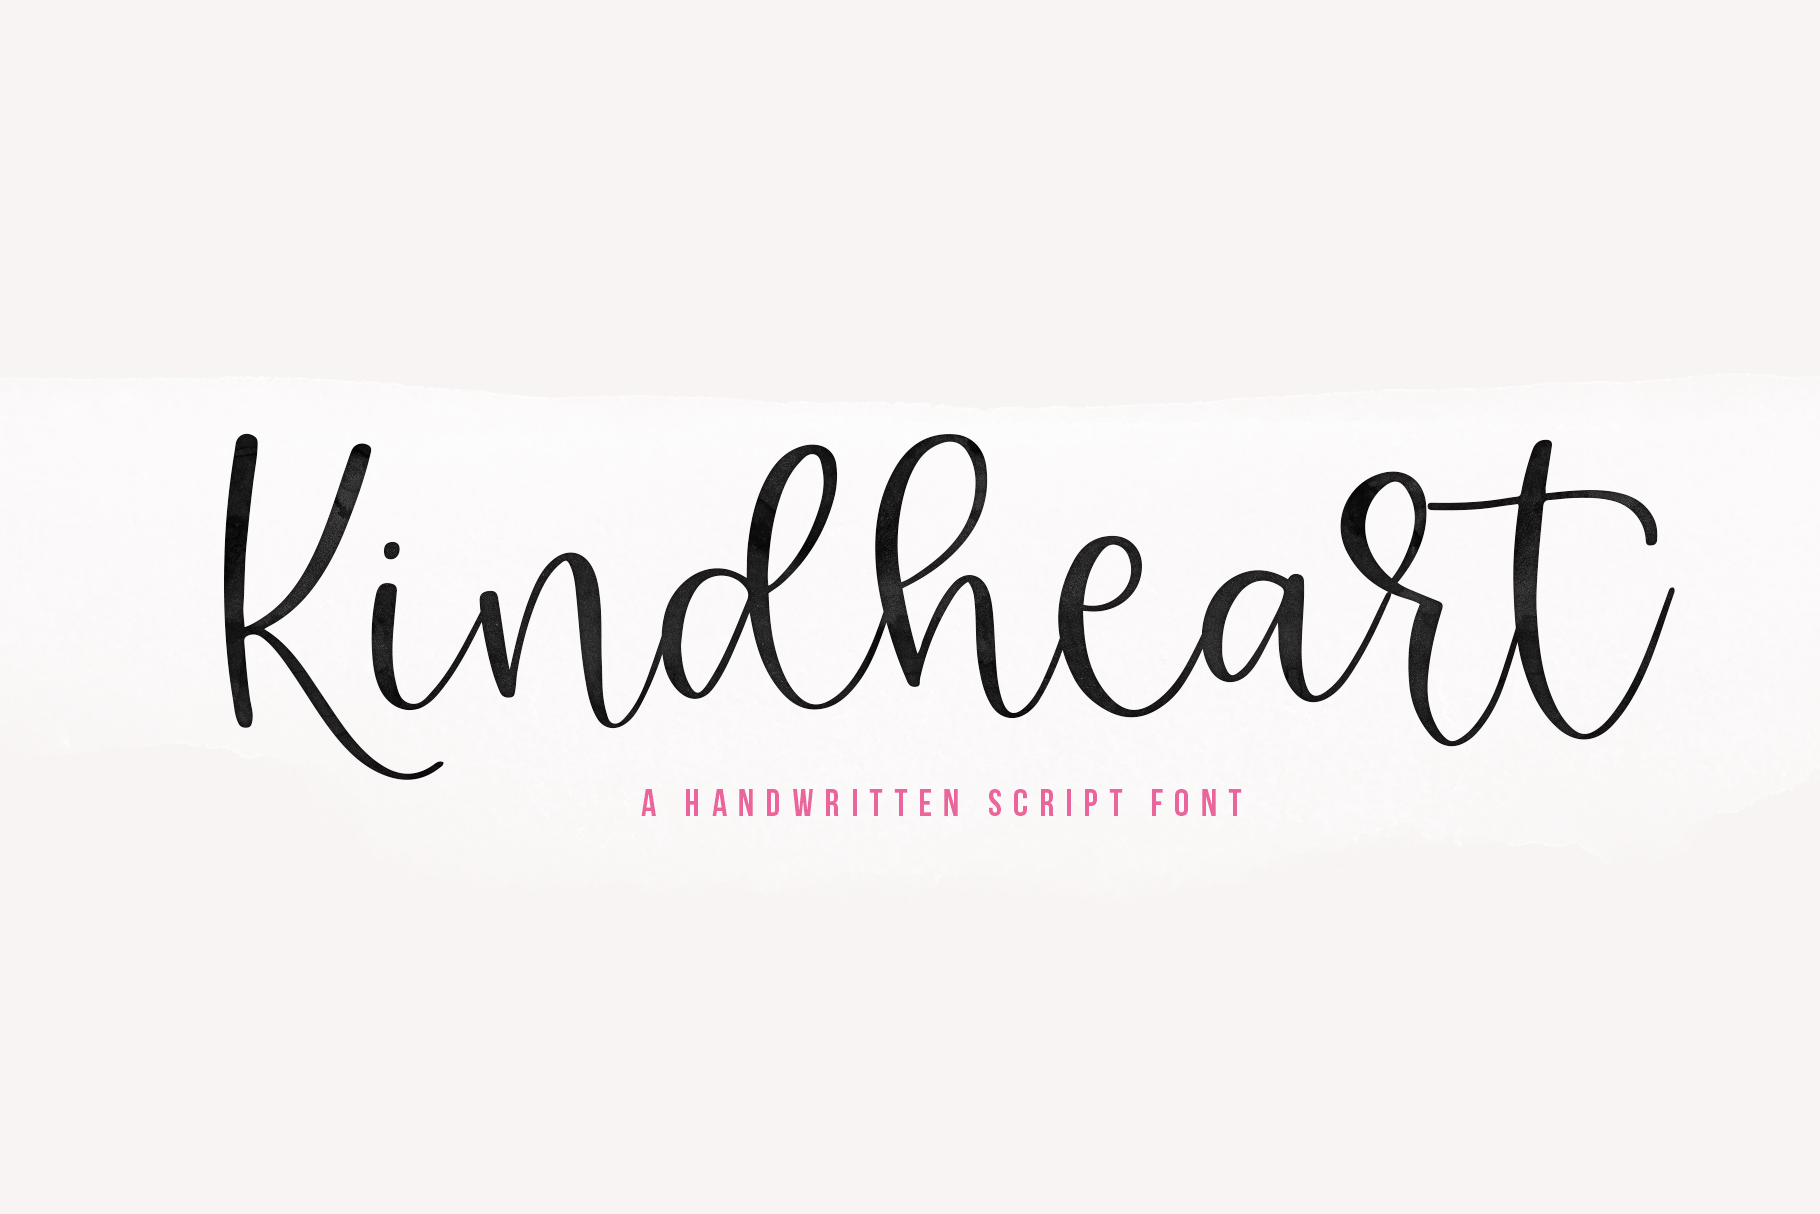 Kindheart Handwritten Script Font By Ka Designs Thehungryjpeg Com